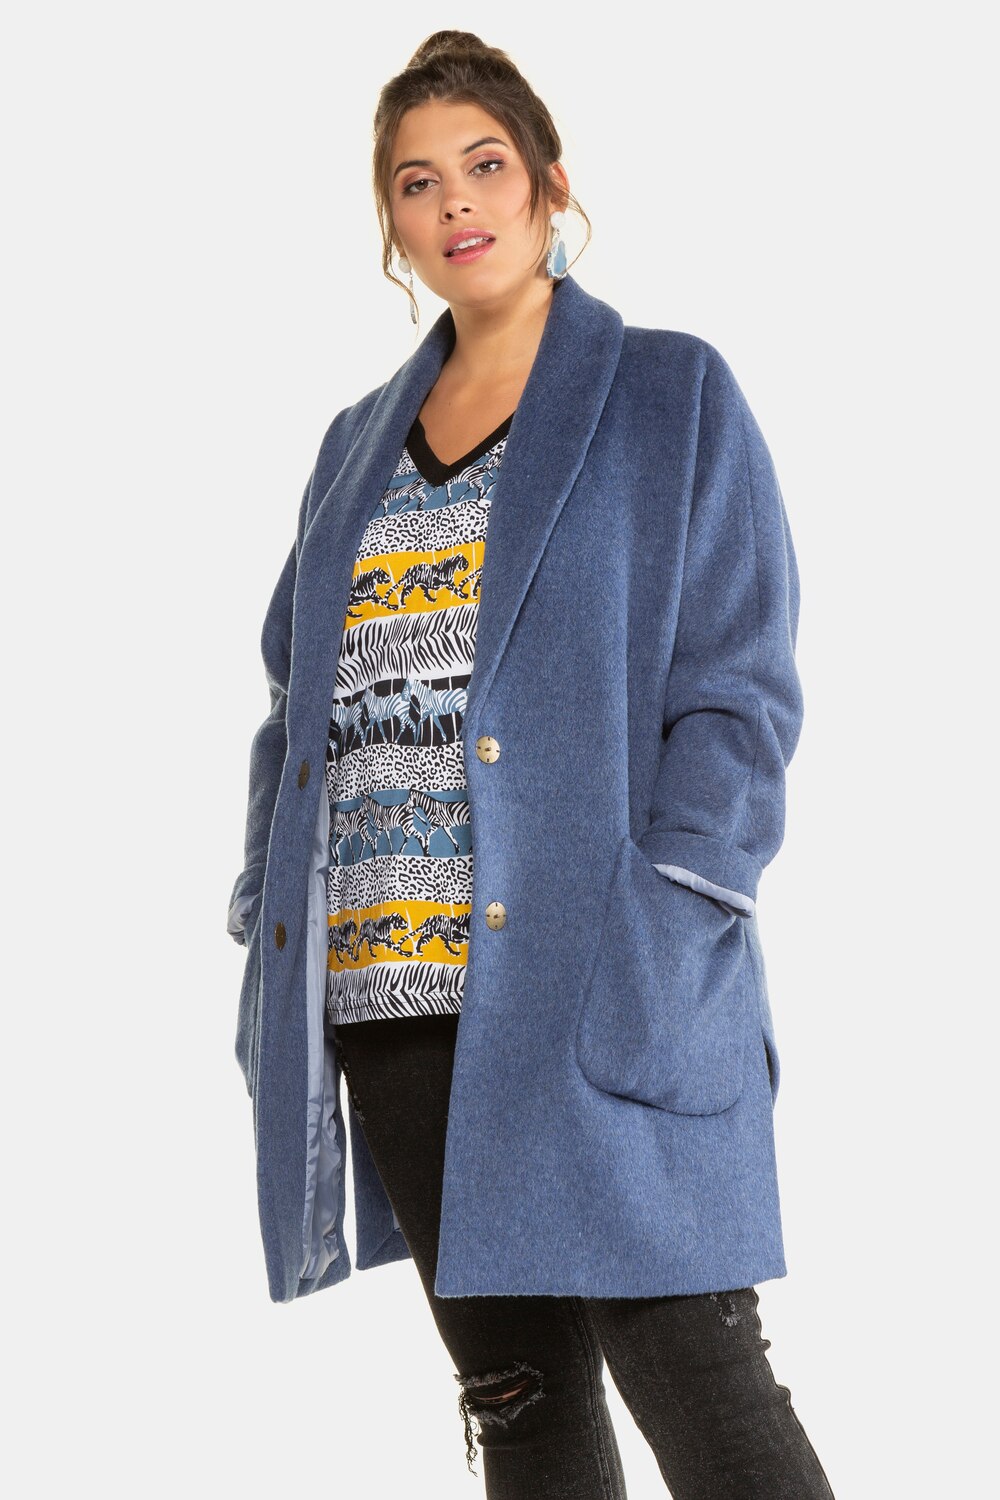 Grote Maten Wollen jas, Dames, blauw, Maat: 54/56, Polyester/Wol, Studio Untold